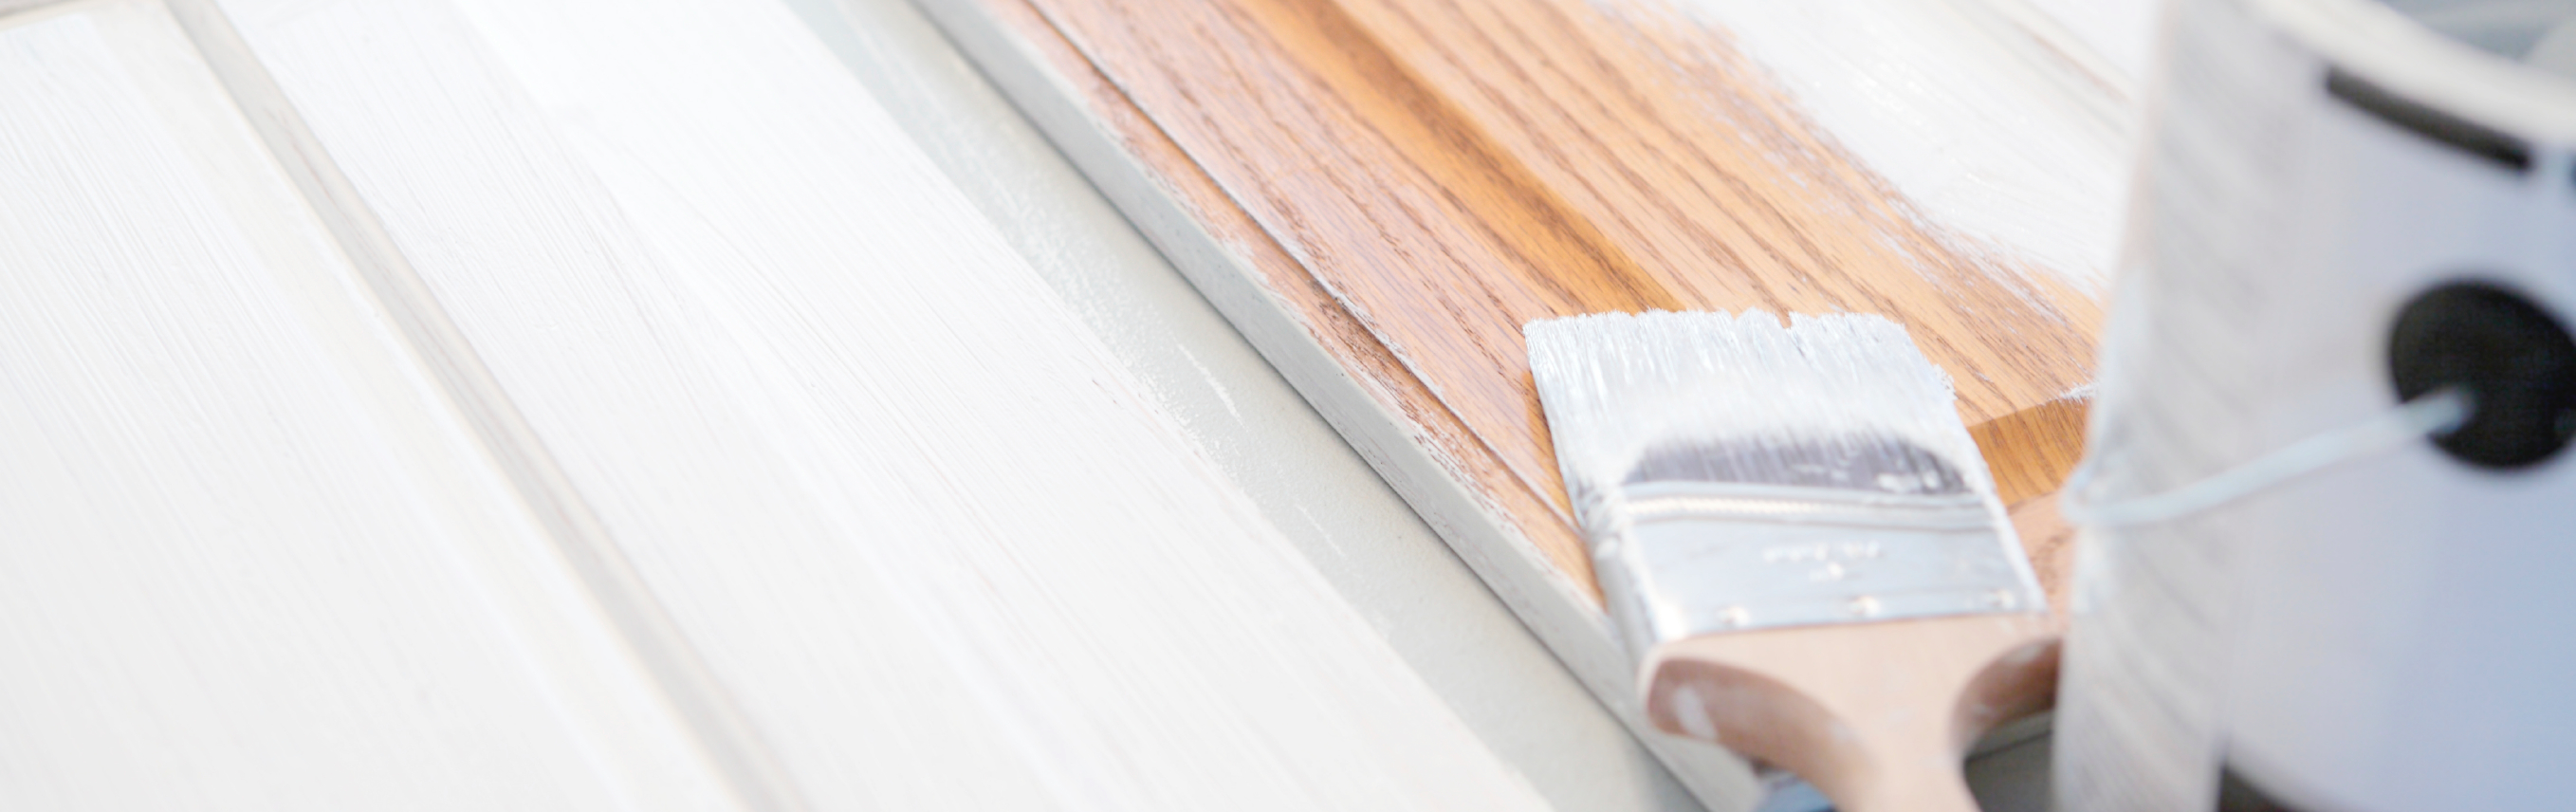 Use Metallic Paint To Make Your Home Sparkle - Paintzen